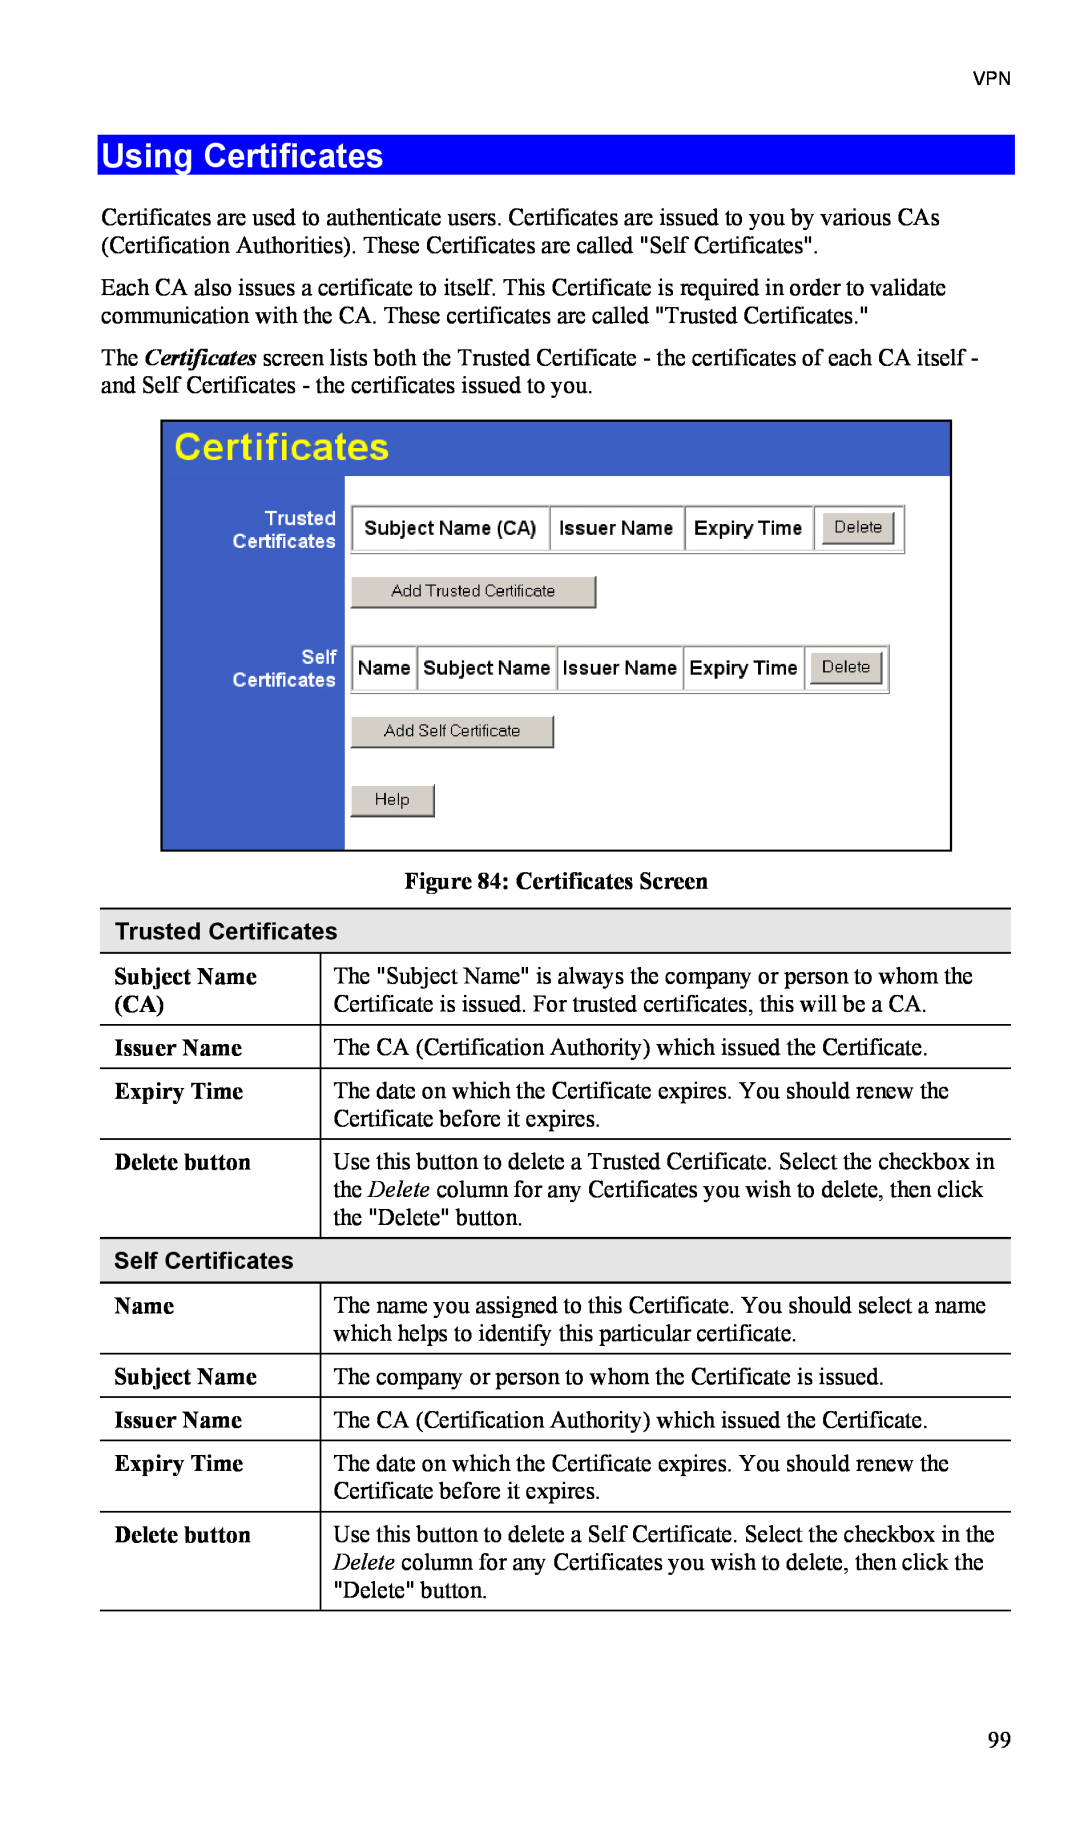 TRENDnet TW100-BRV204, VPN Firewall Router manual Using Certificates, Trusted Certificates, Self Certificates 